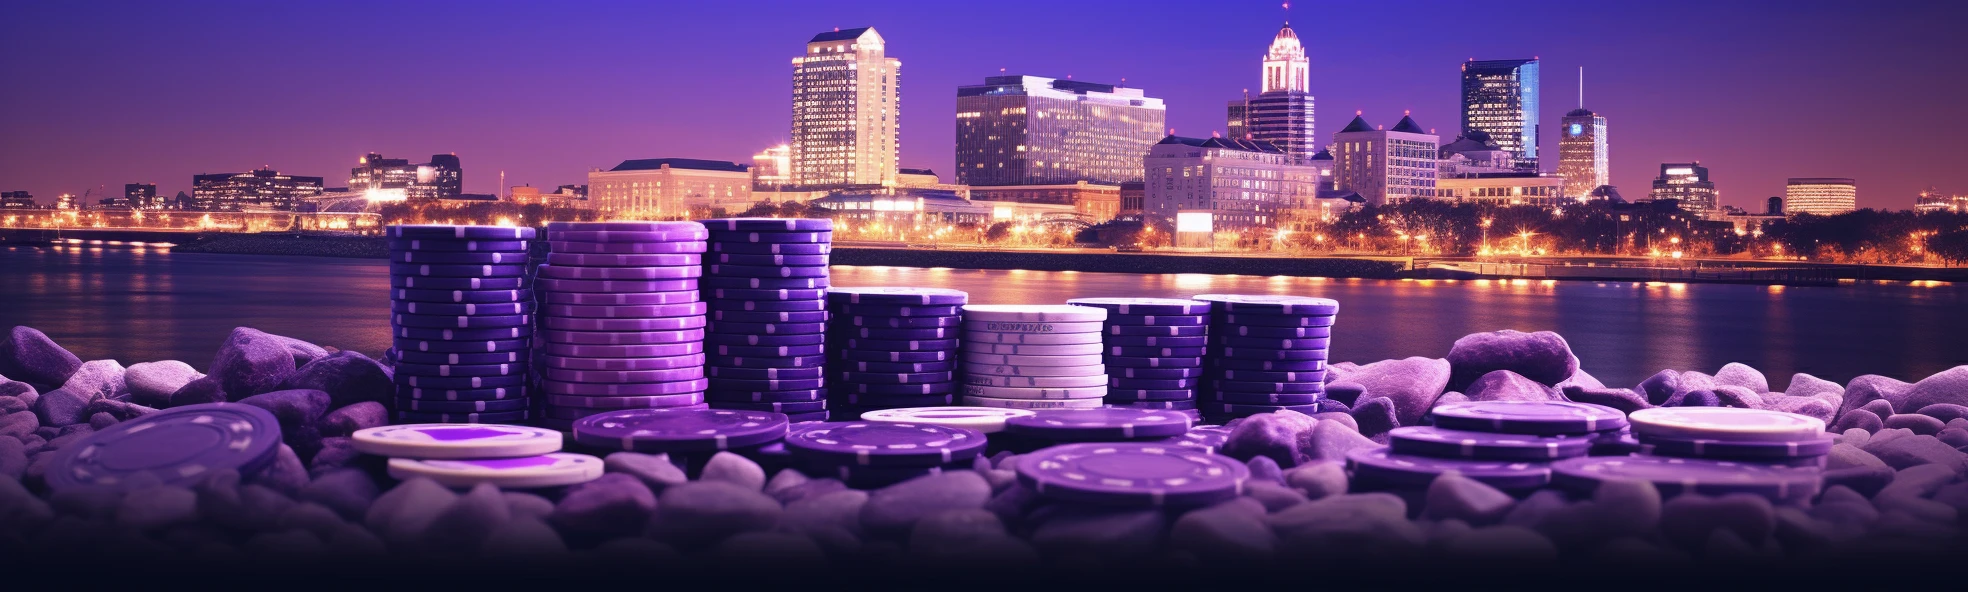 Massachusetts gambling